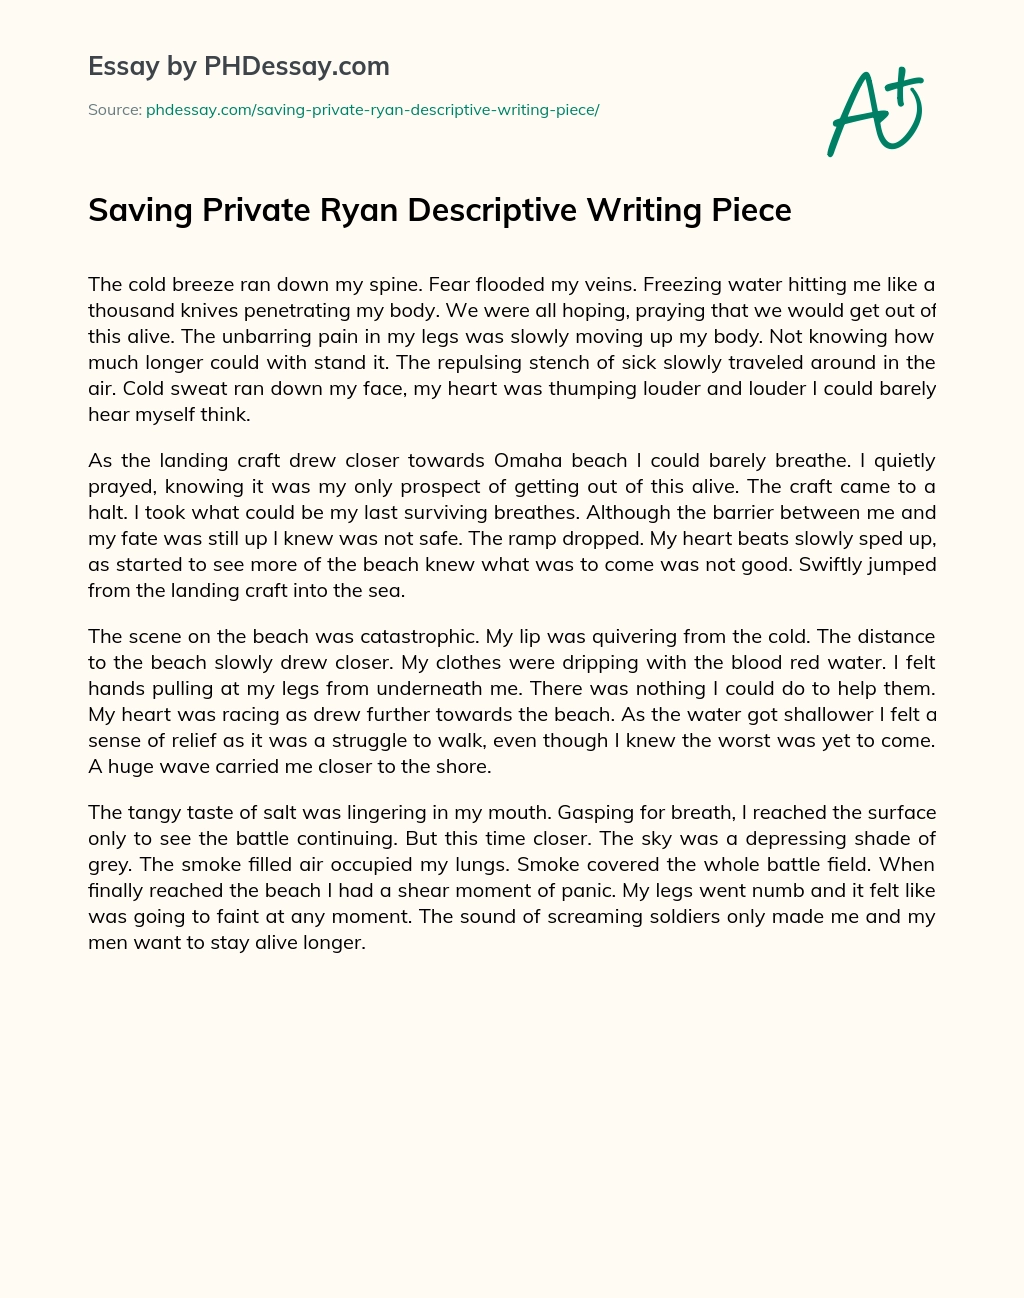 Saving Private Ryan Descriptive Writing Piece essay